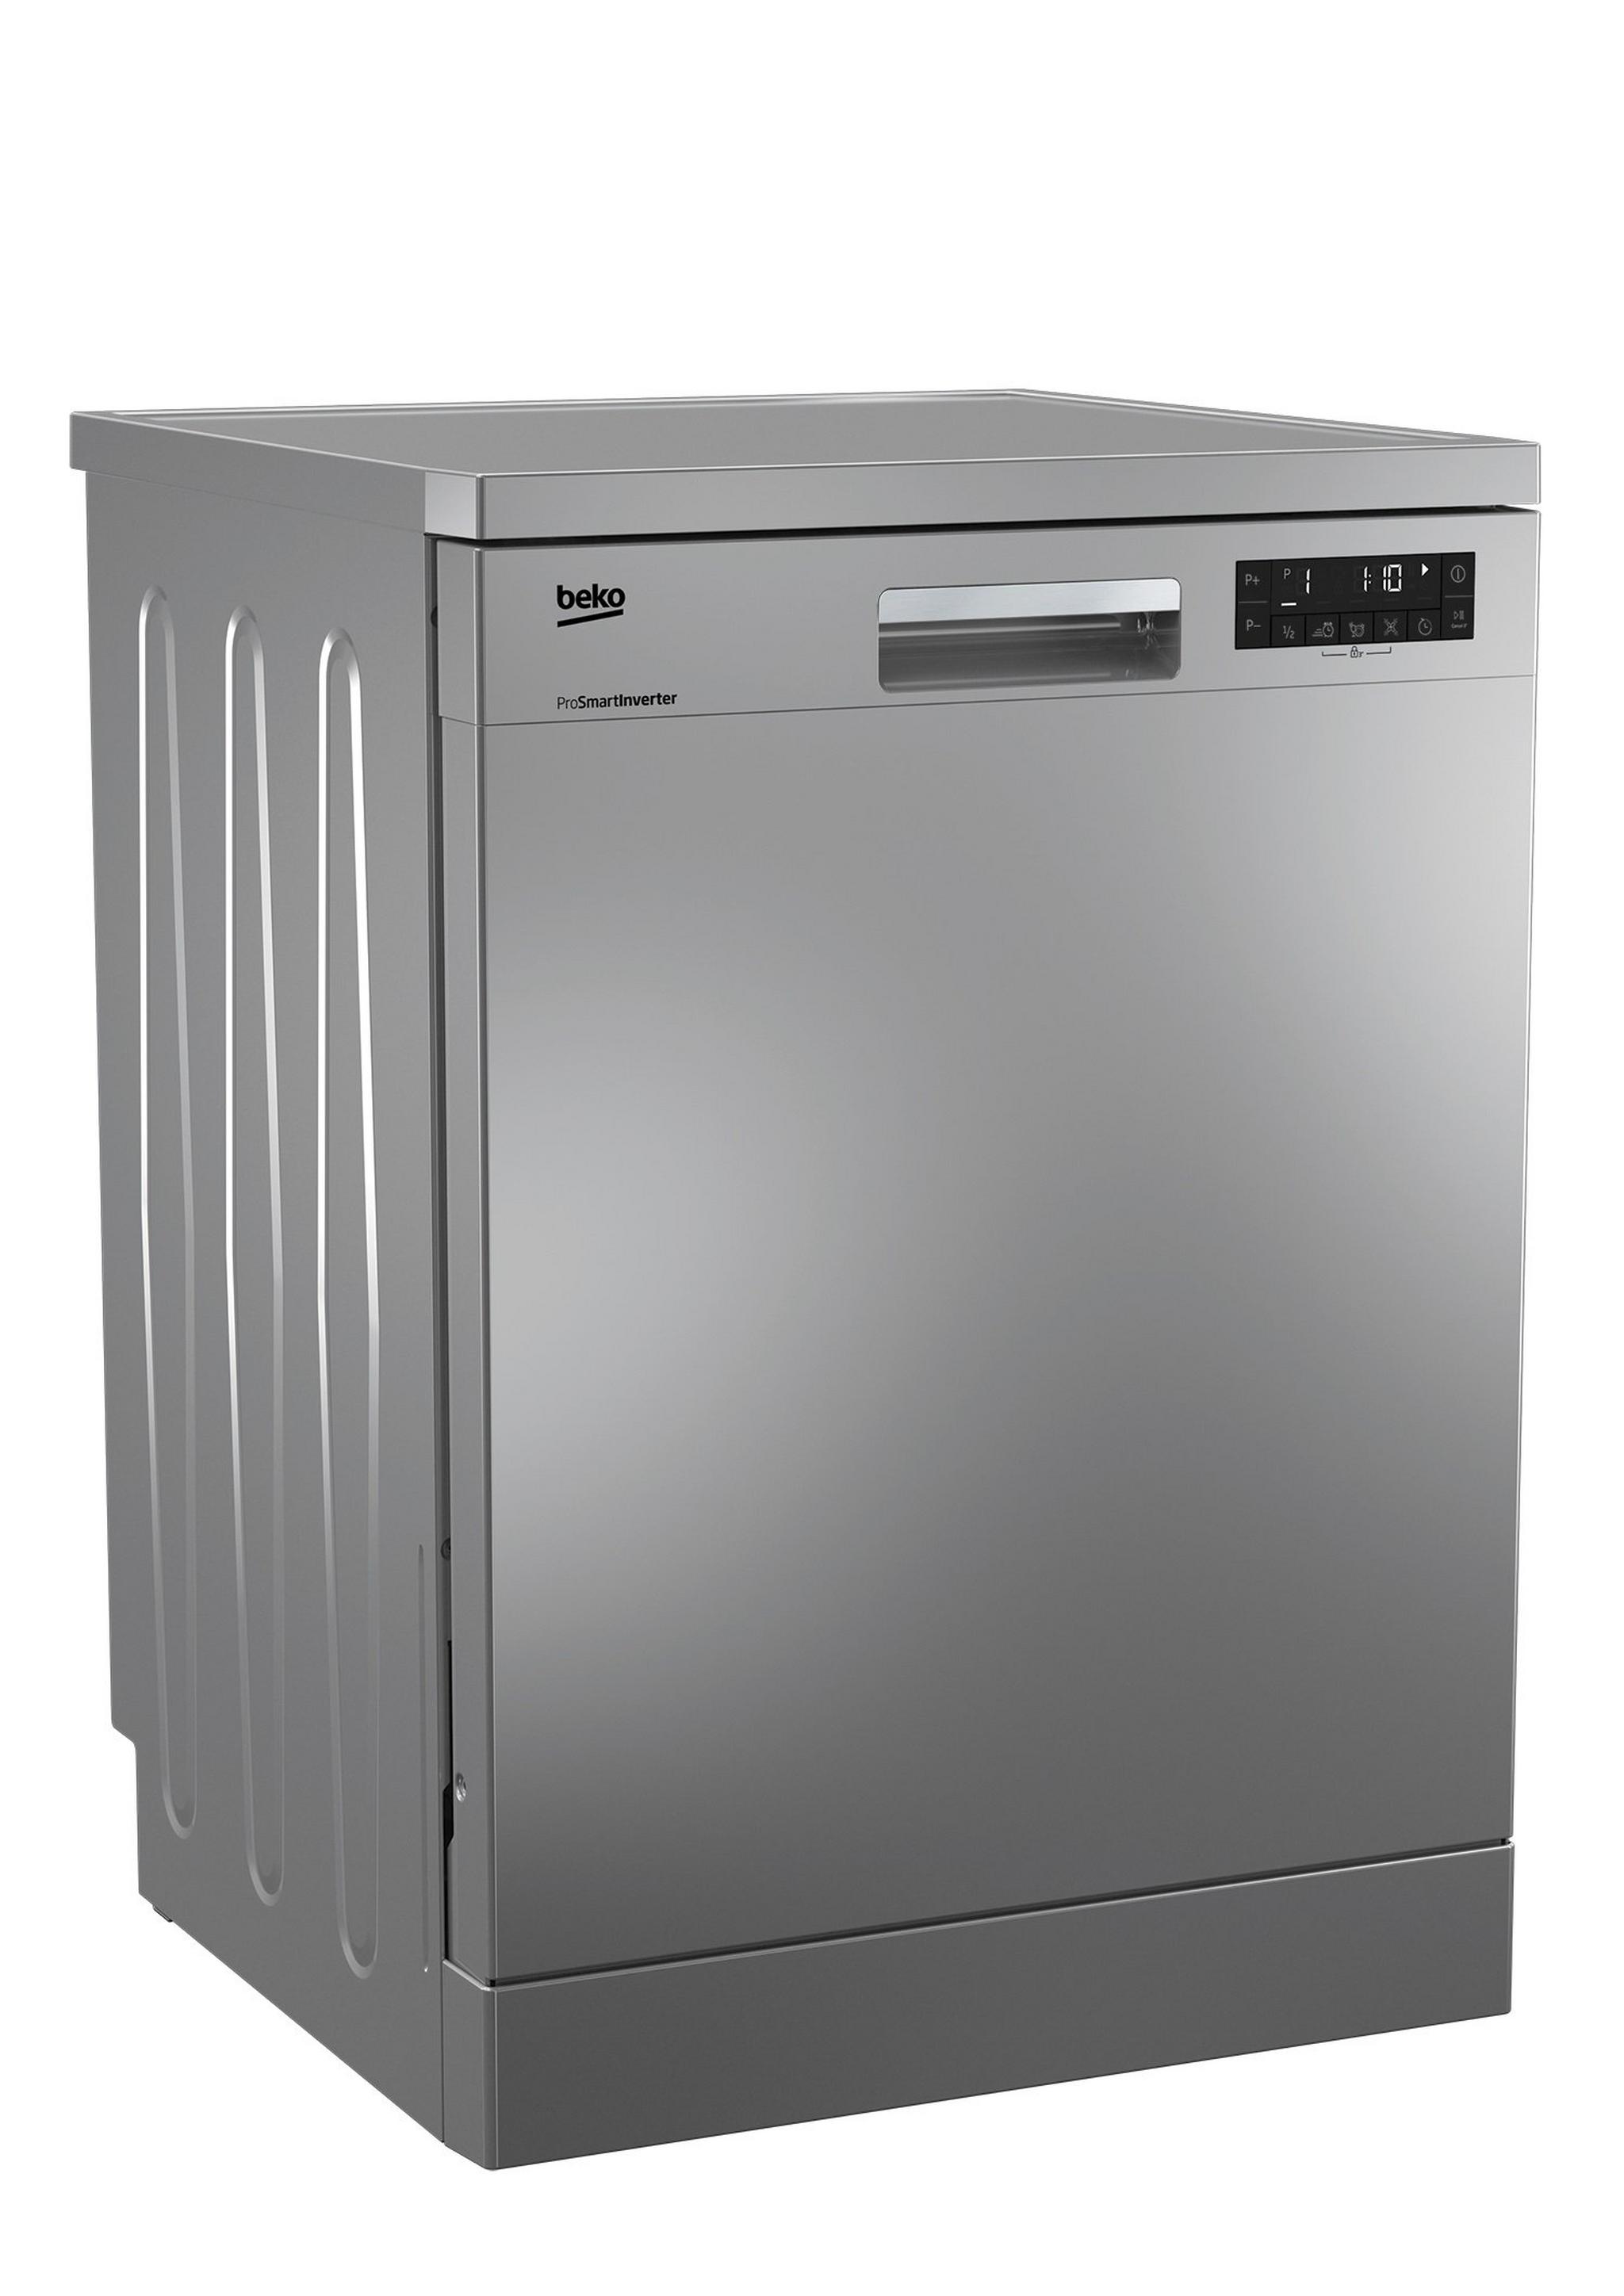 Beko 8 Programs 15 Place settings Free Standing Dishwasher, DFN28420S - Silver